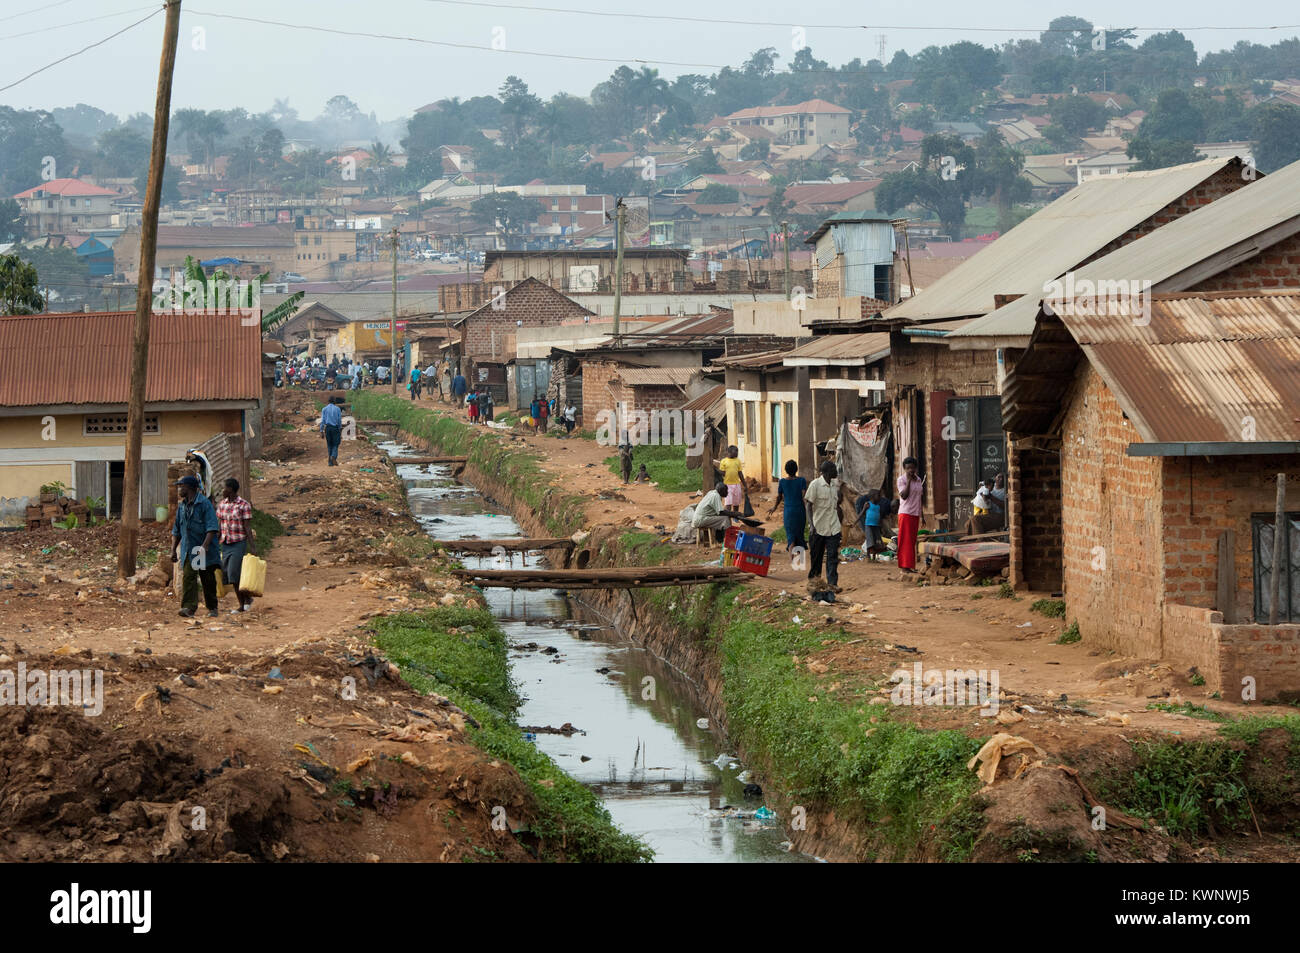 Slumgebiet von Kampala, der Hauptstadt Ugandas. Stockfoto